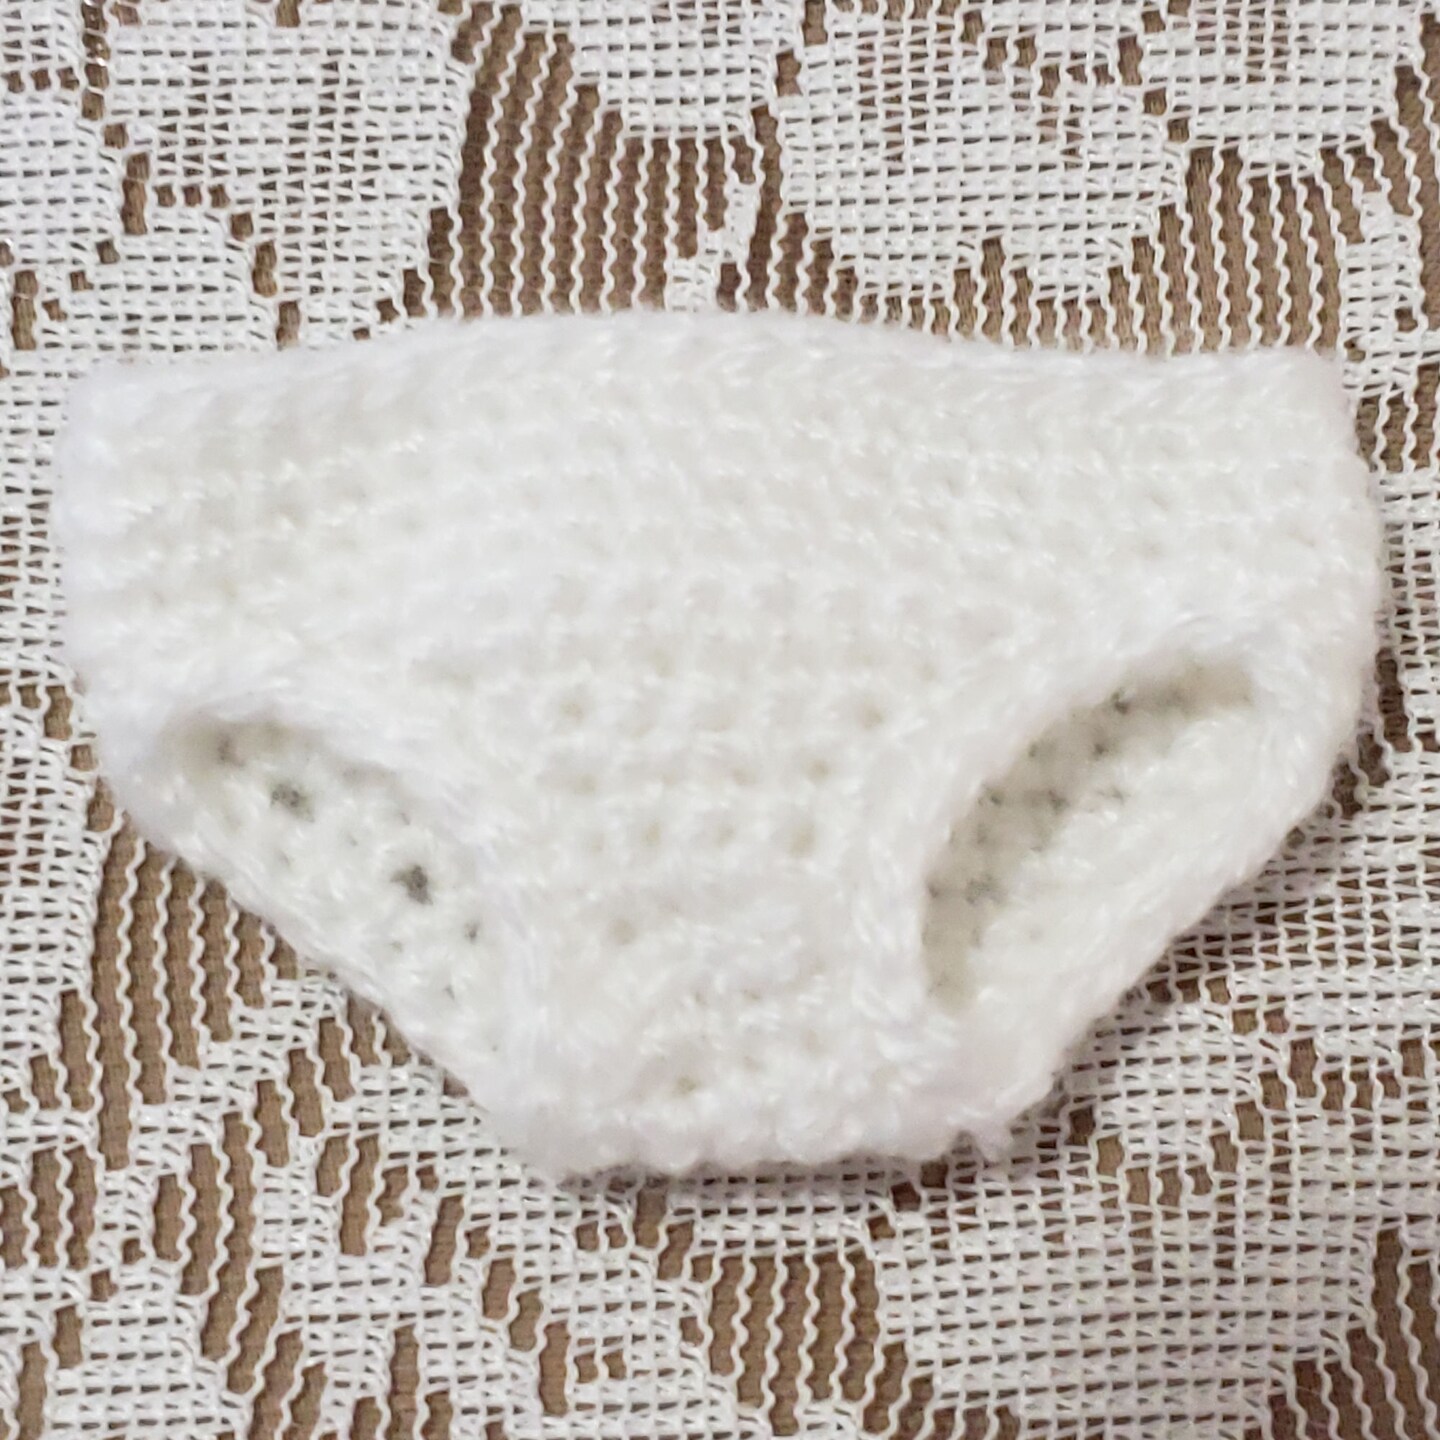 3-Piece Layette Set for 5 Berenguer Lots to Love Mini Baby Dolls - Diaper  Underwear, Hat, Sock Booties - Handmade Crochet - White